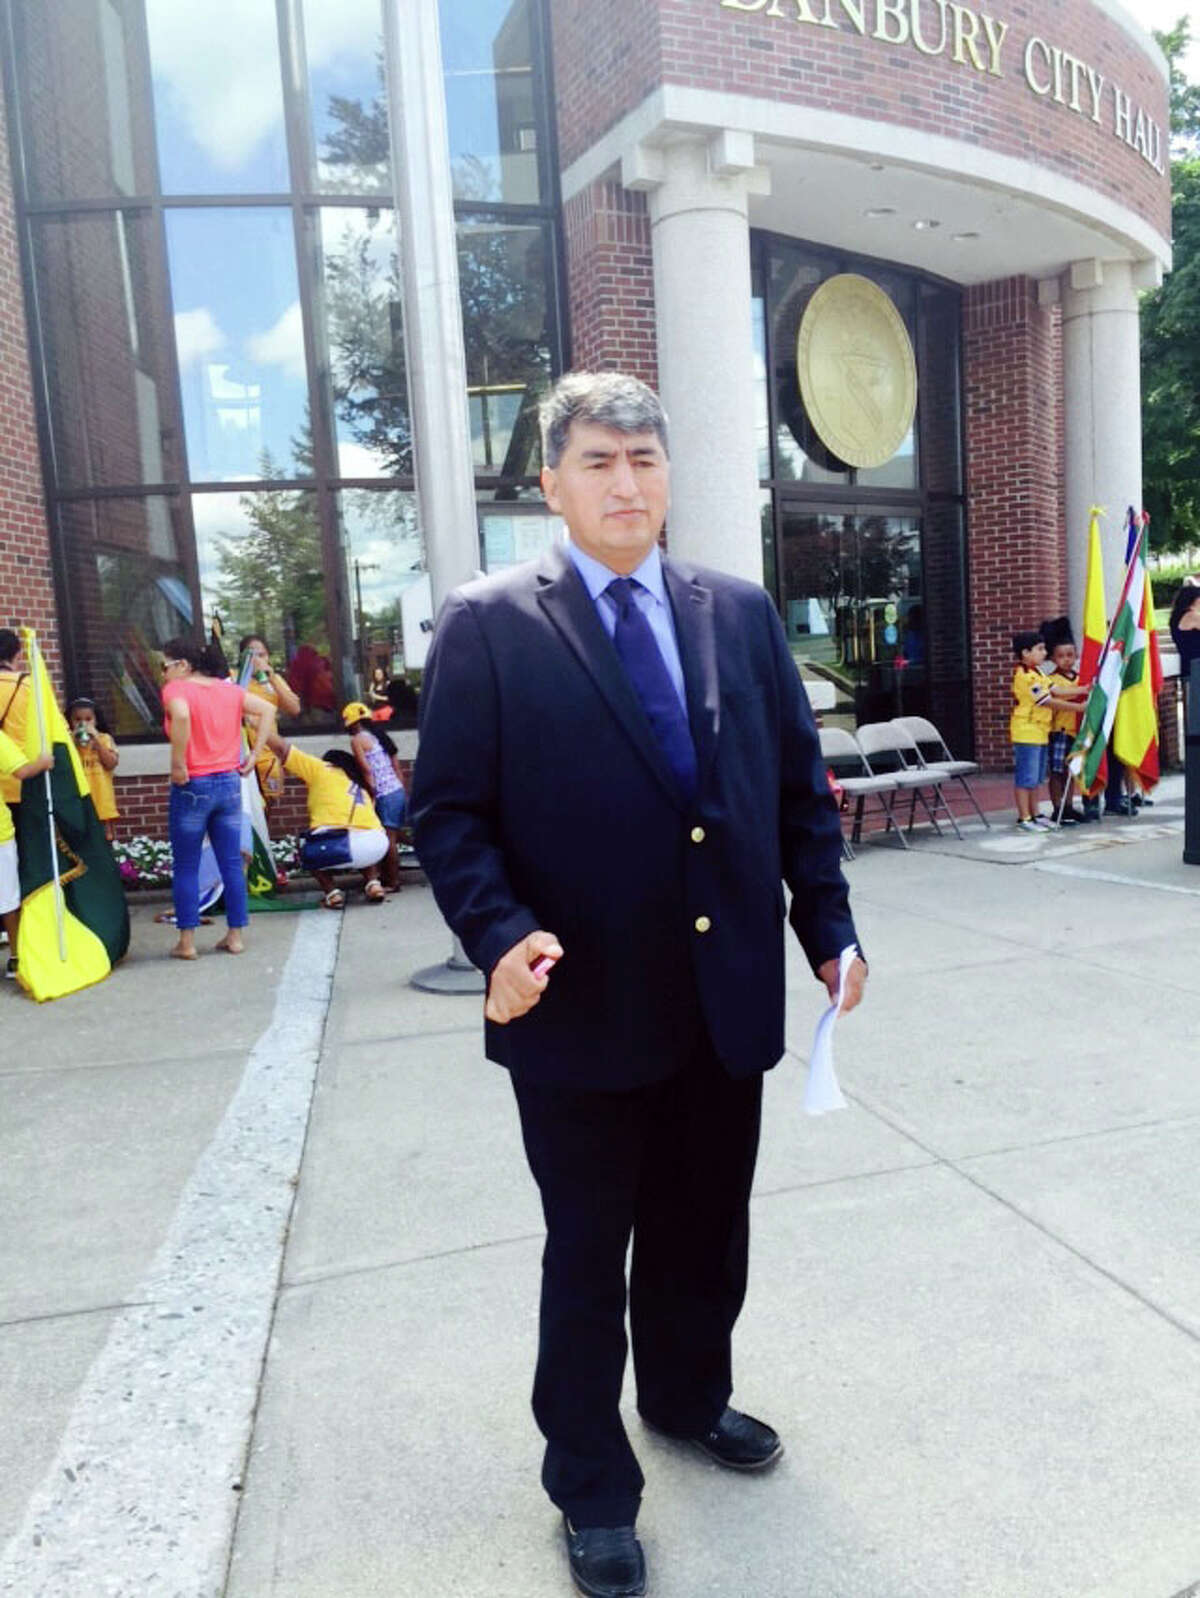 Milton Pauta, president of the Ecuadorian Civic Center of Greater Danbury